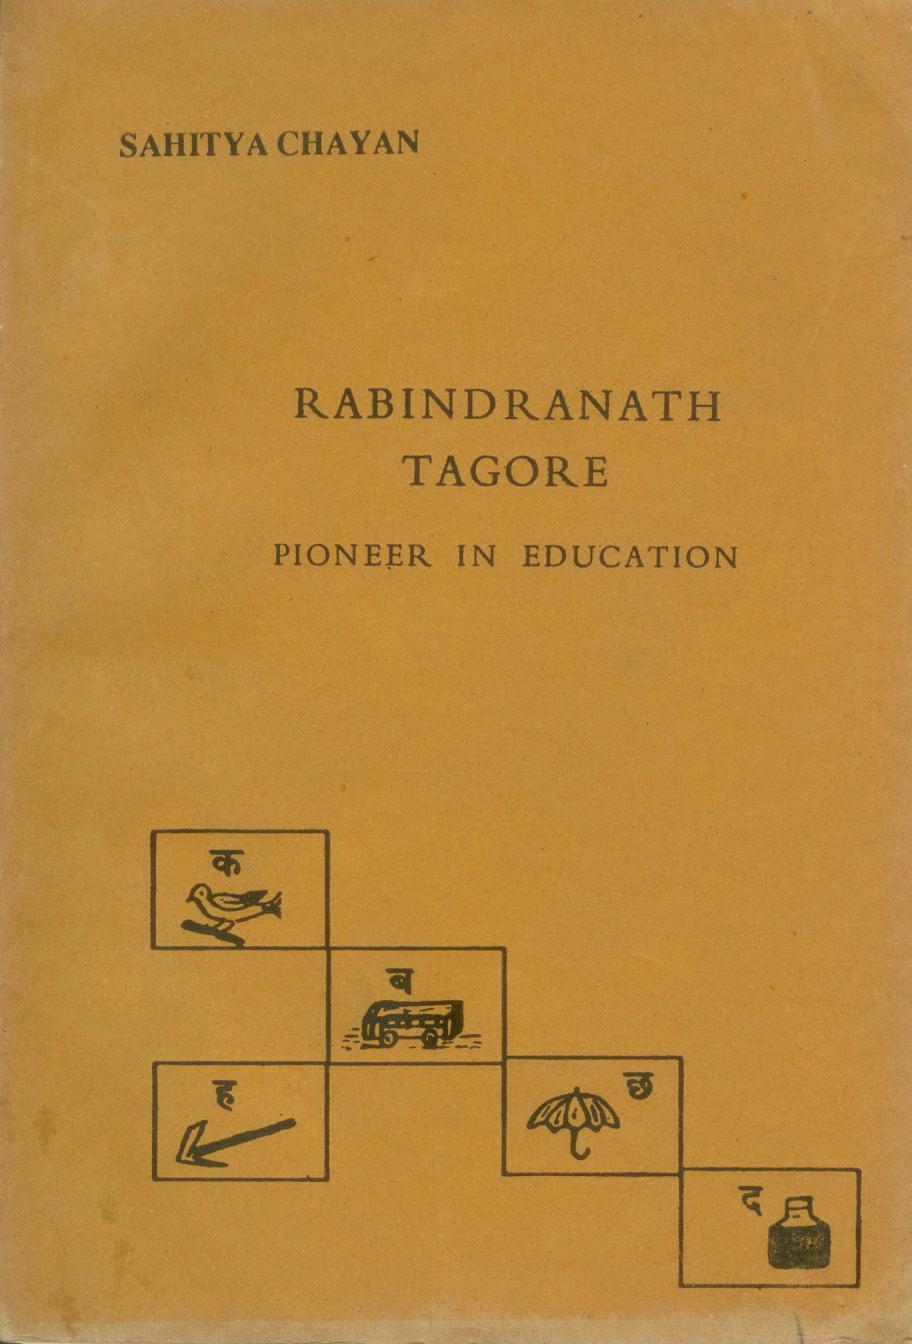 Rabindranath Tagore - Pioneer in Education, Essays and Exchanges between Rabindranath Tagore and L. K. Elmhirst